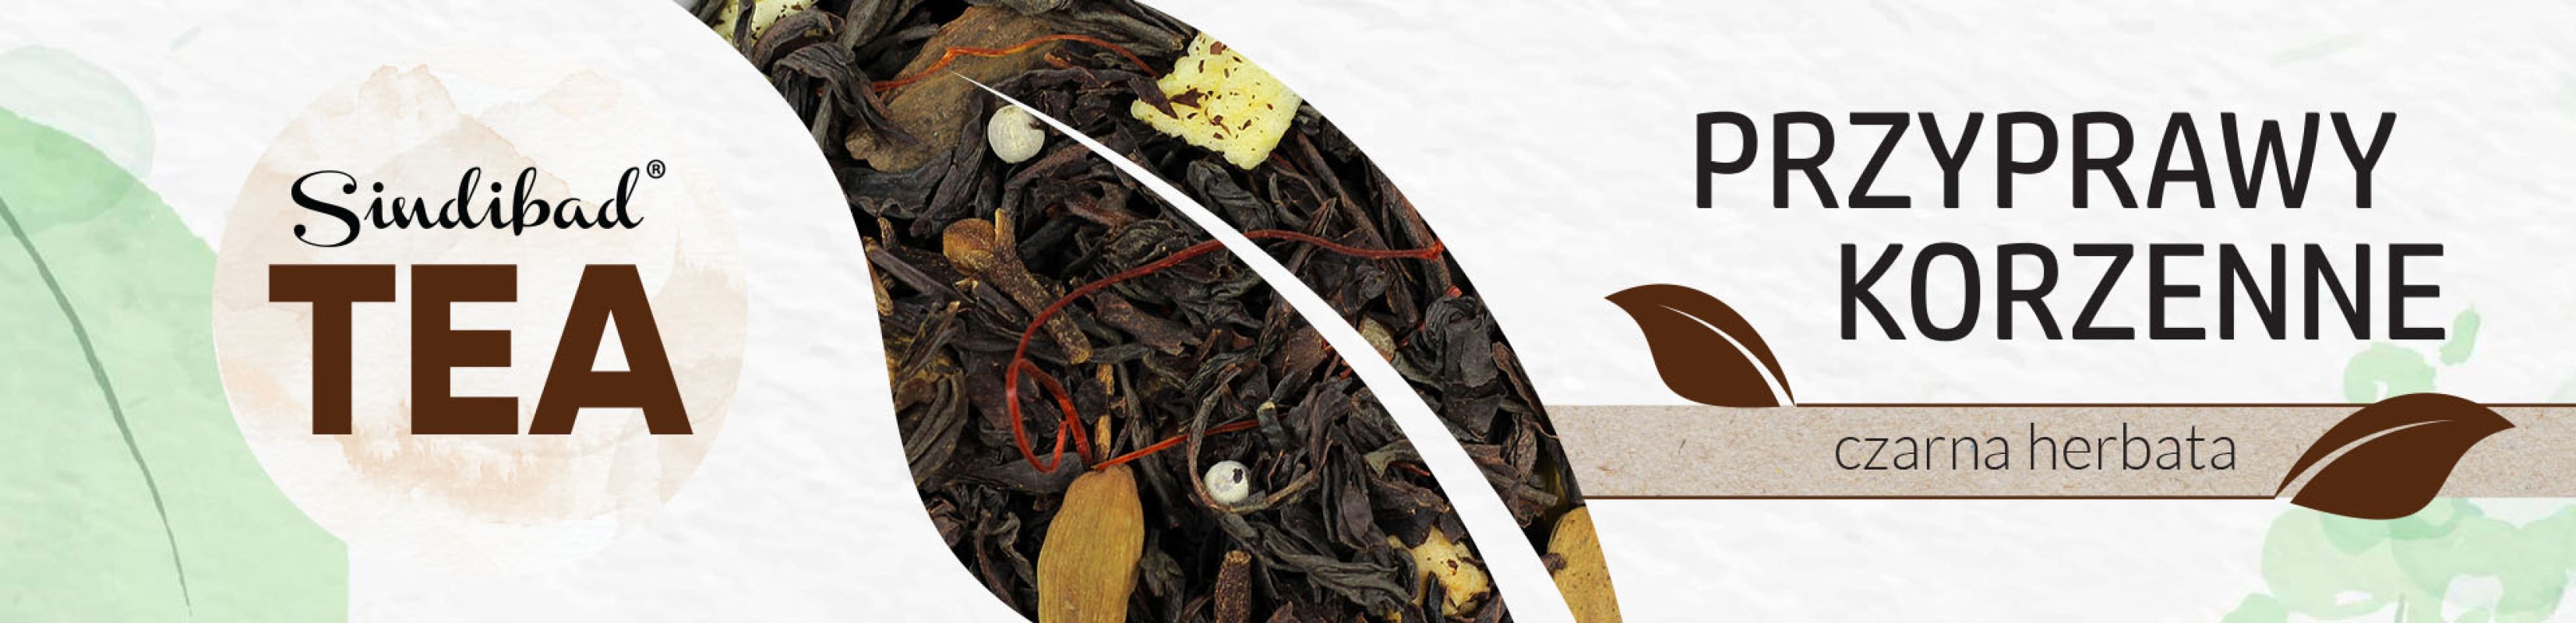 korzenna czarna herbata Sindibad 4